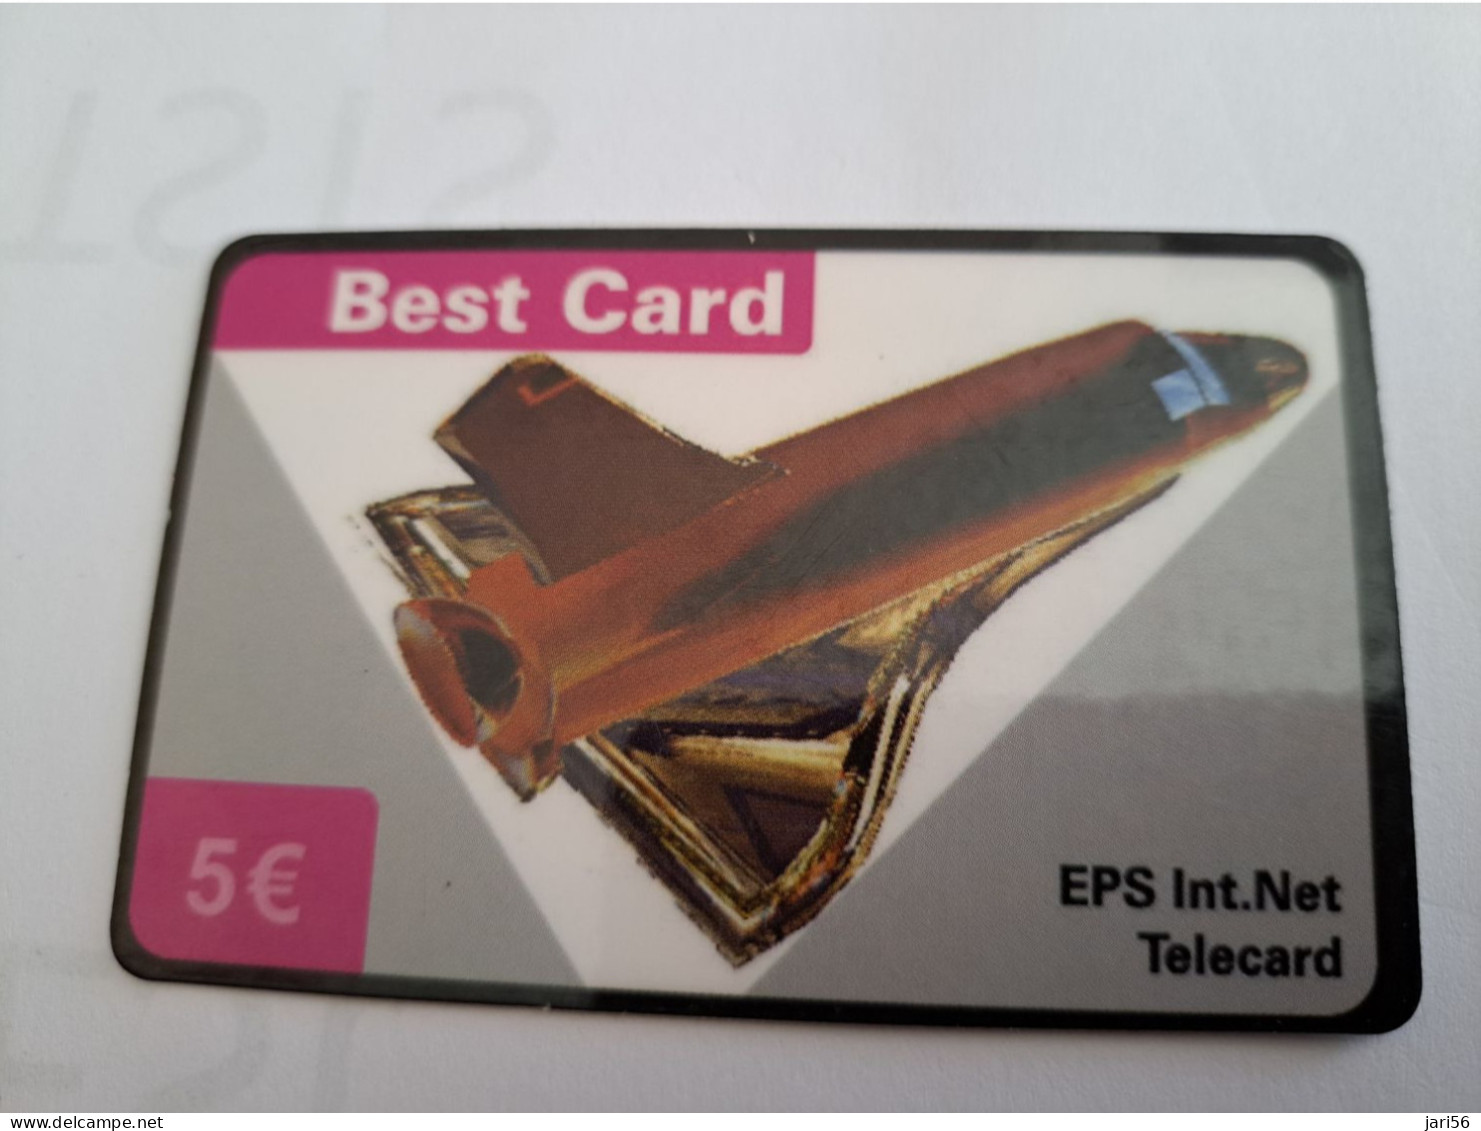 DUITSLAND/GERMANY  € 5,- / BEST CARD/ SPACE SHUTTLE   ON CARD        Fine Used  PREPAID  **16533** - [2] Móviles Tarjetas Prepagadas & Recargos